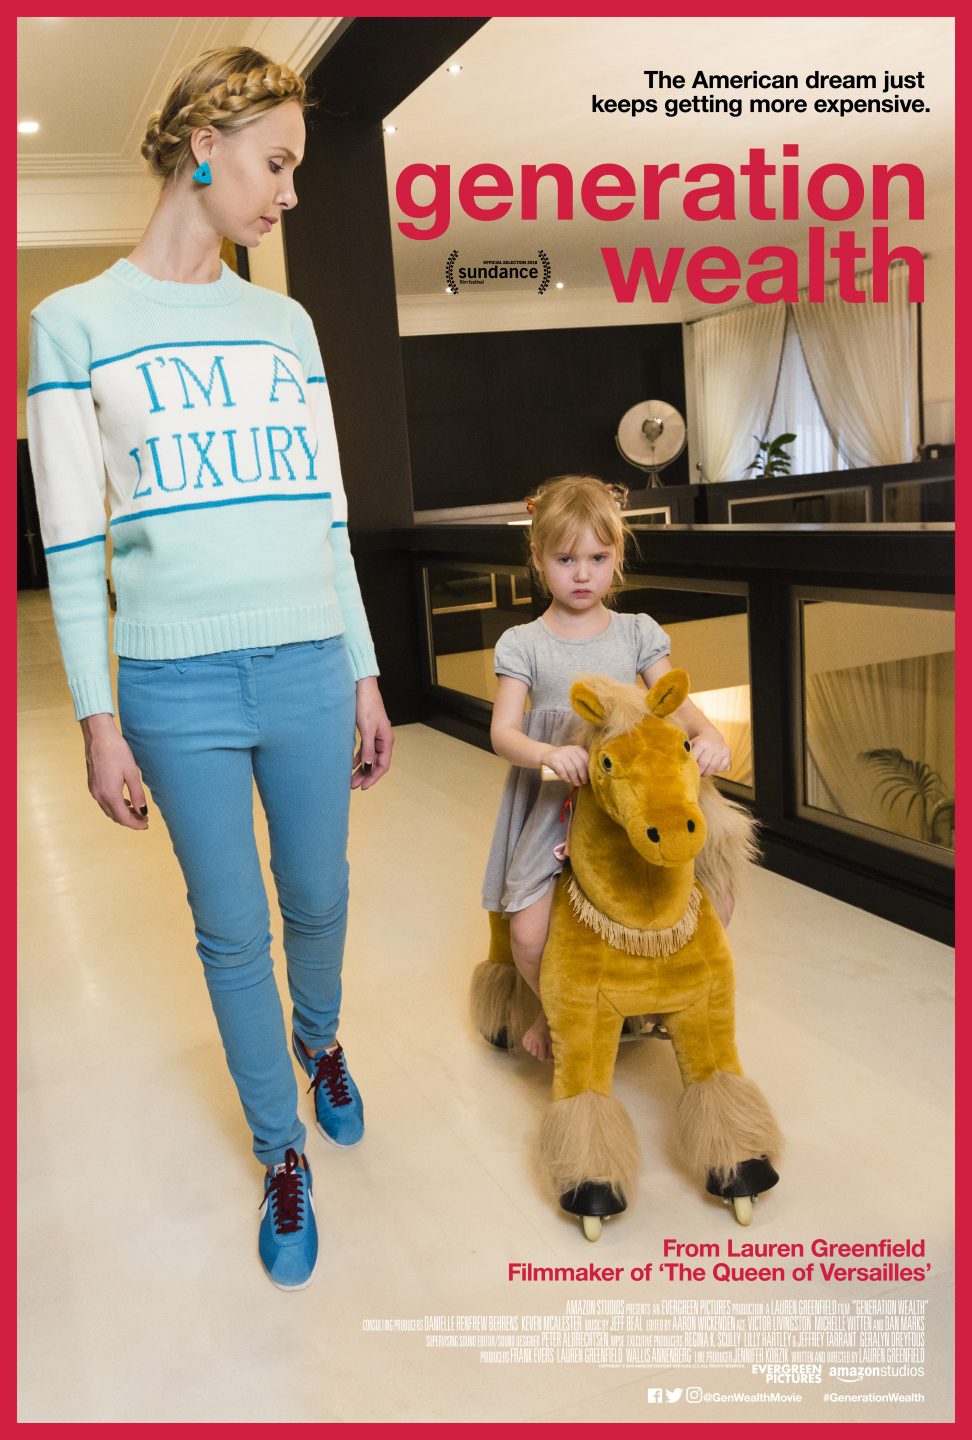 Generation Wealth poster (Amazon Studios)